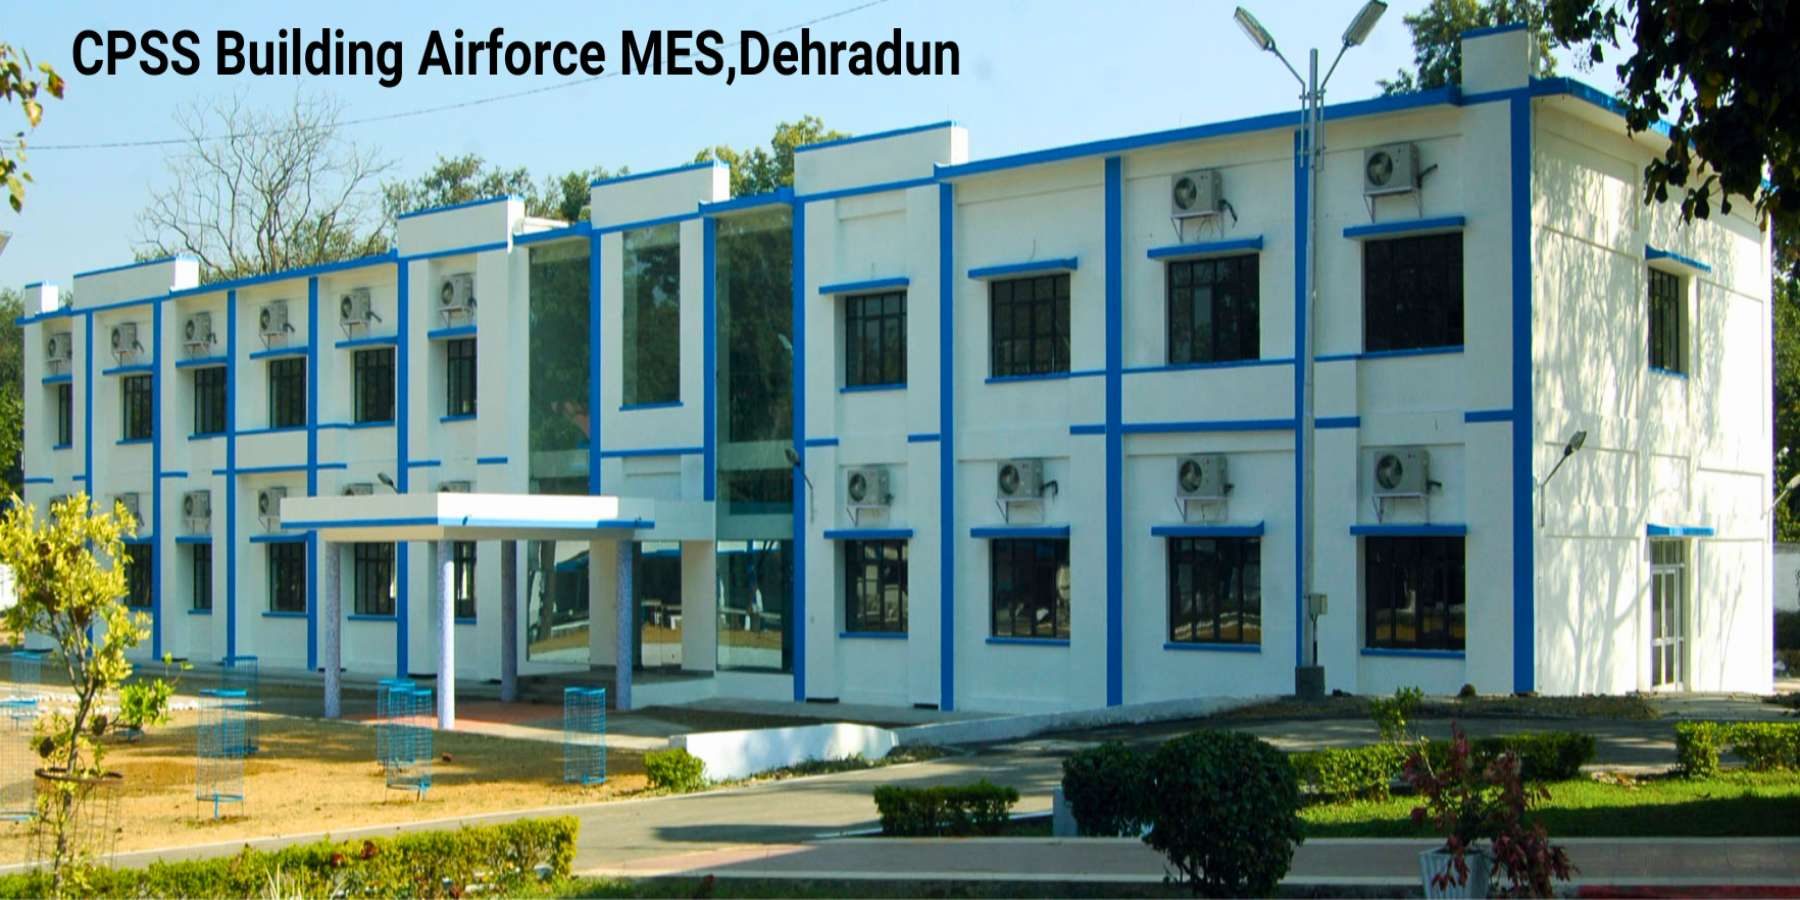 CPSS Building Airforce MES,Dehradun (2) (1)